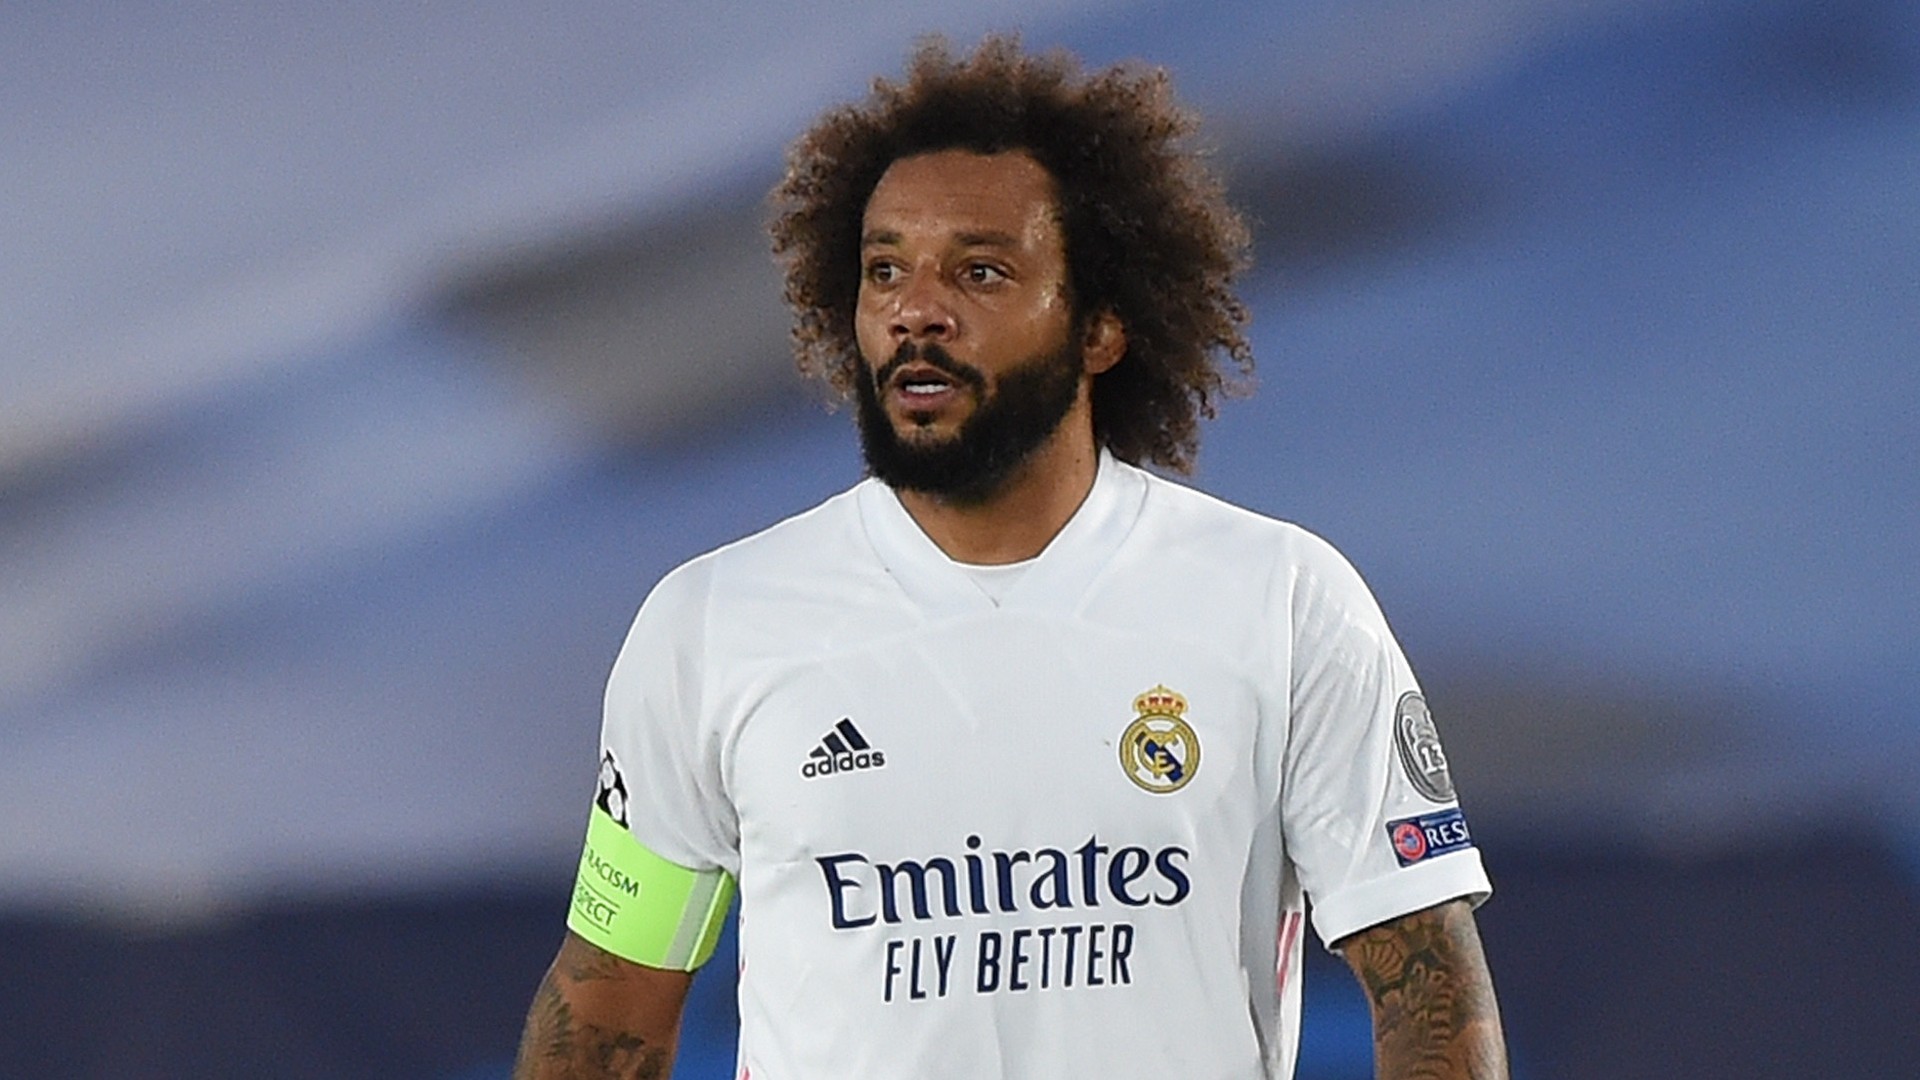 Marcelo succeeds Ramos as Real Madrid captain and sees 'dream come true' |  Goal.com